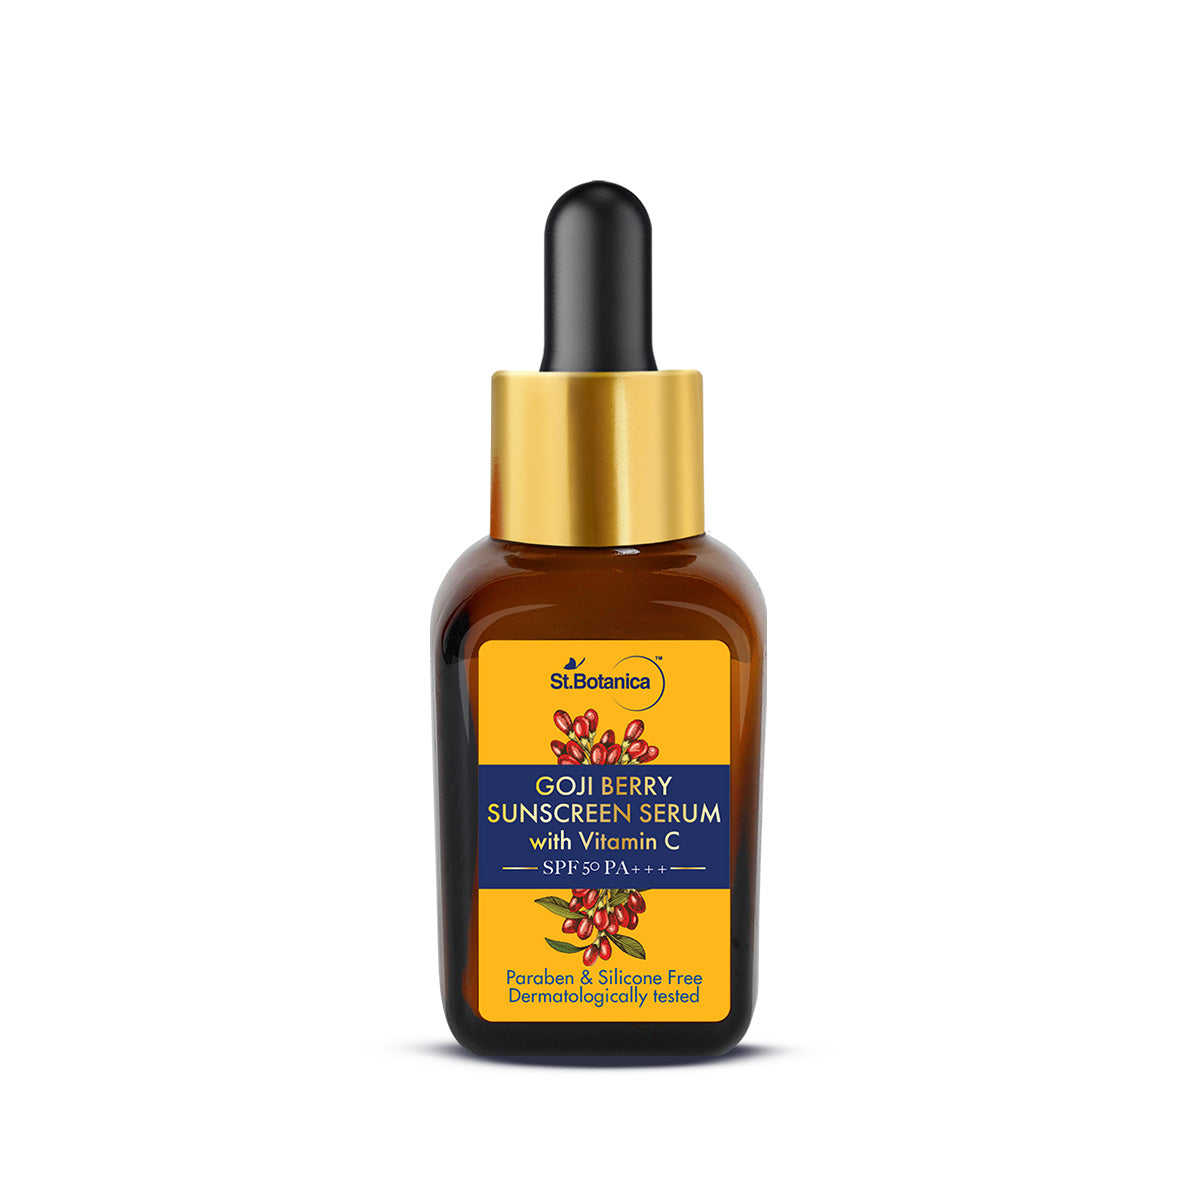 St.Botanica Goji Berry SPF 50 PA+++ Sunscreen Serum, 30ml with Goji Berry, 1% Vitamin C & Dragonfruit | For Broadspectrum Sun Protection & Bright Skin | Paraben Free, Cruelty Free & Vegan